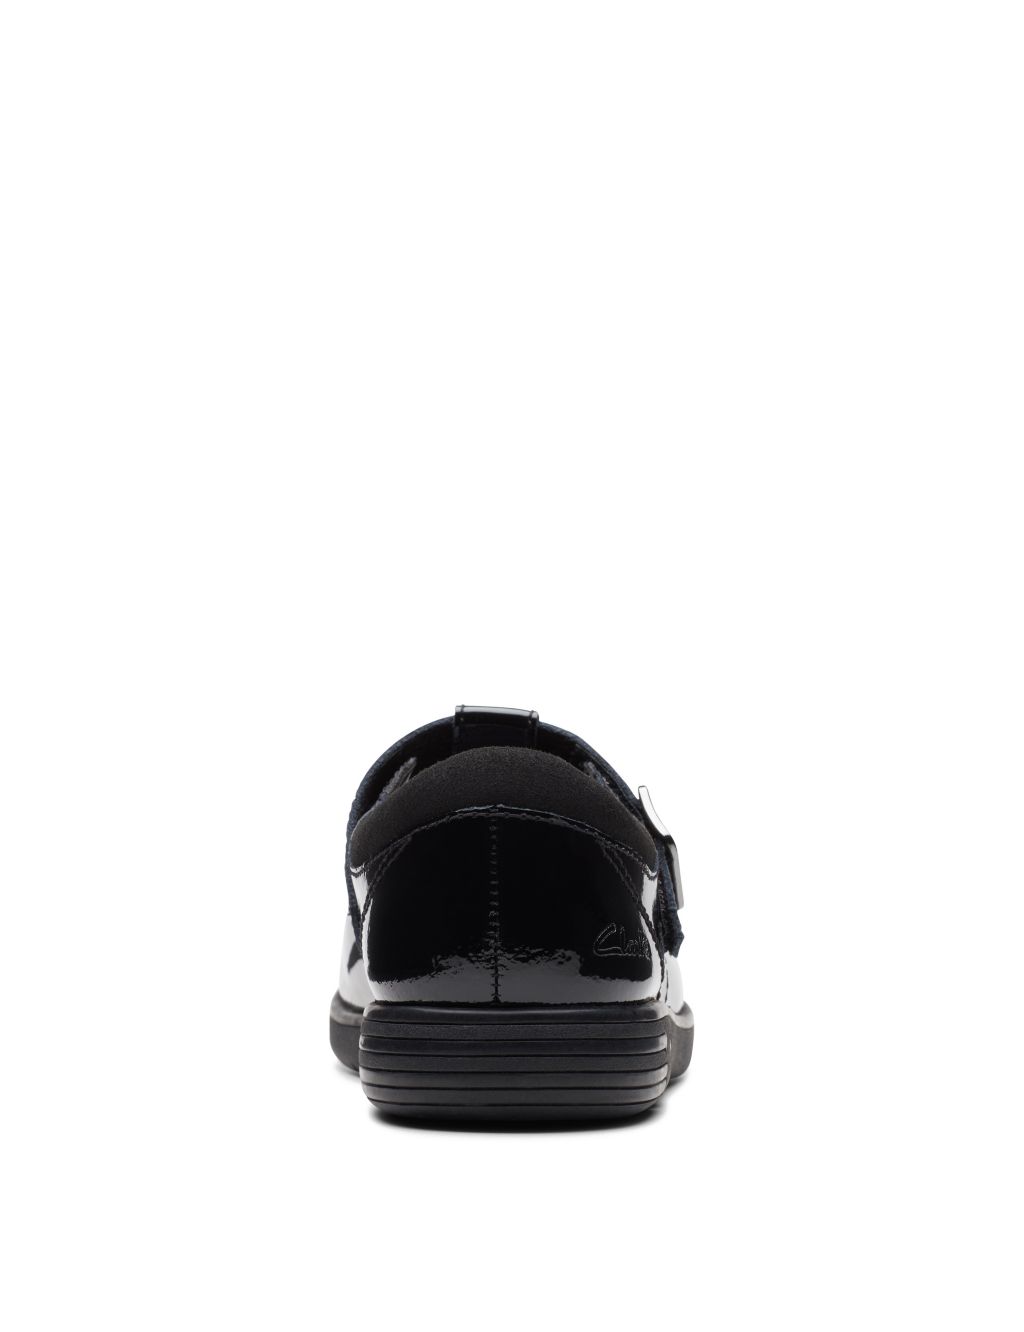 Kids' Patent Leather Riptape T-Bar Shoes (8 Small - 4 Large) image 7